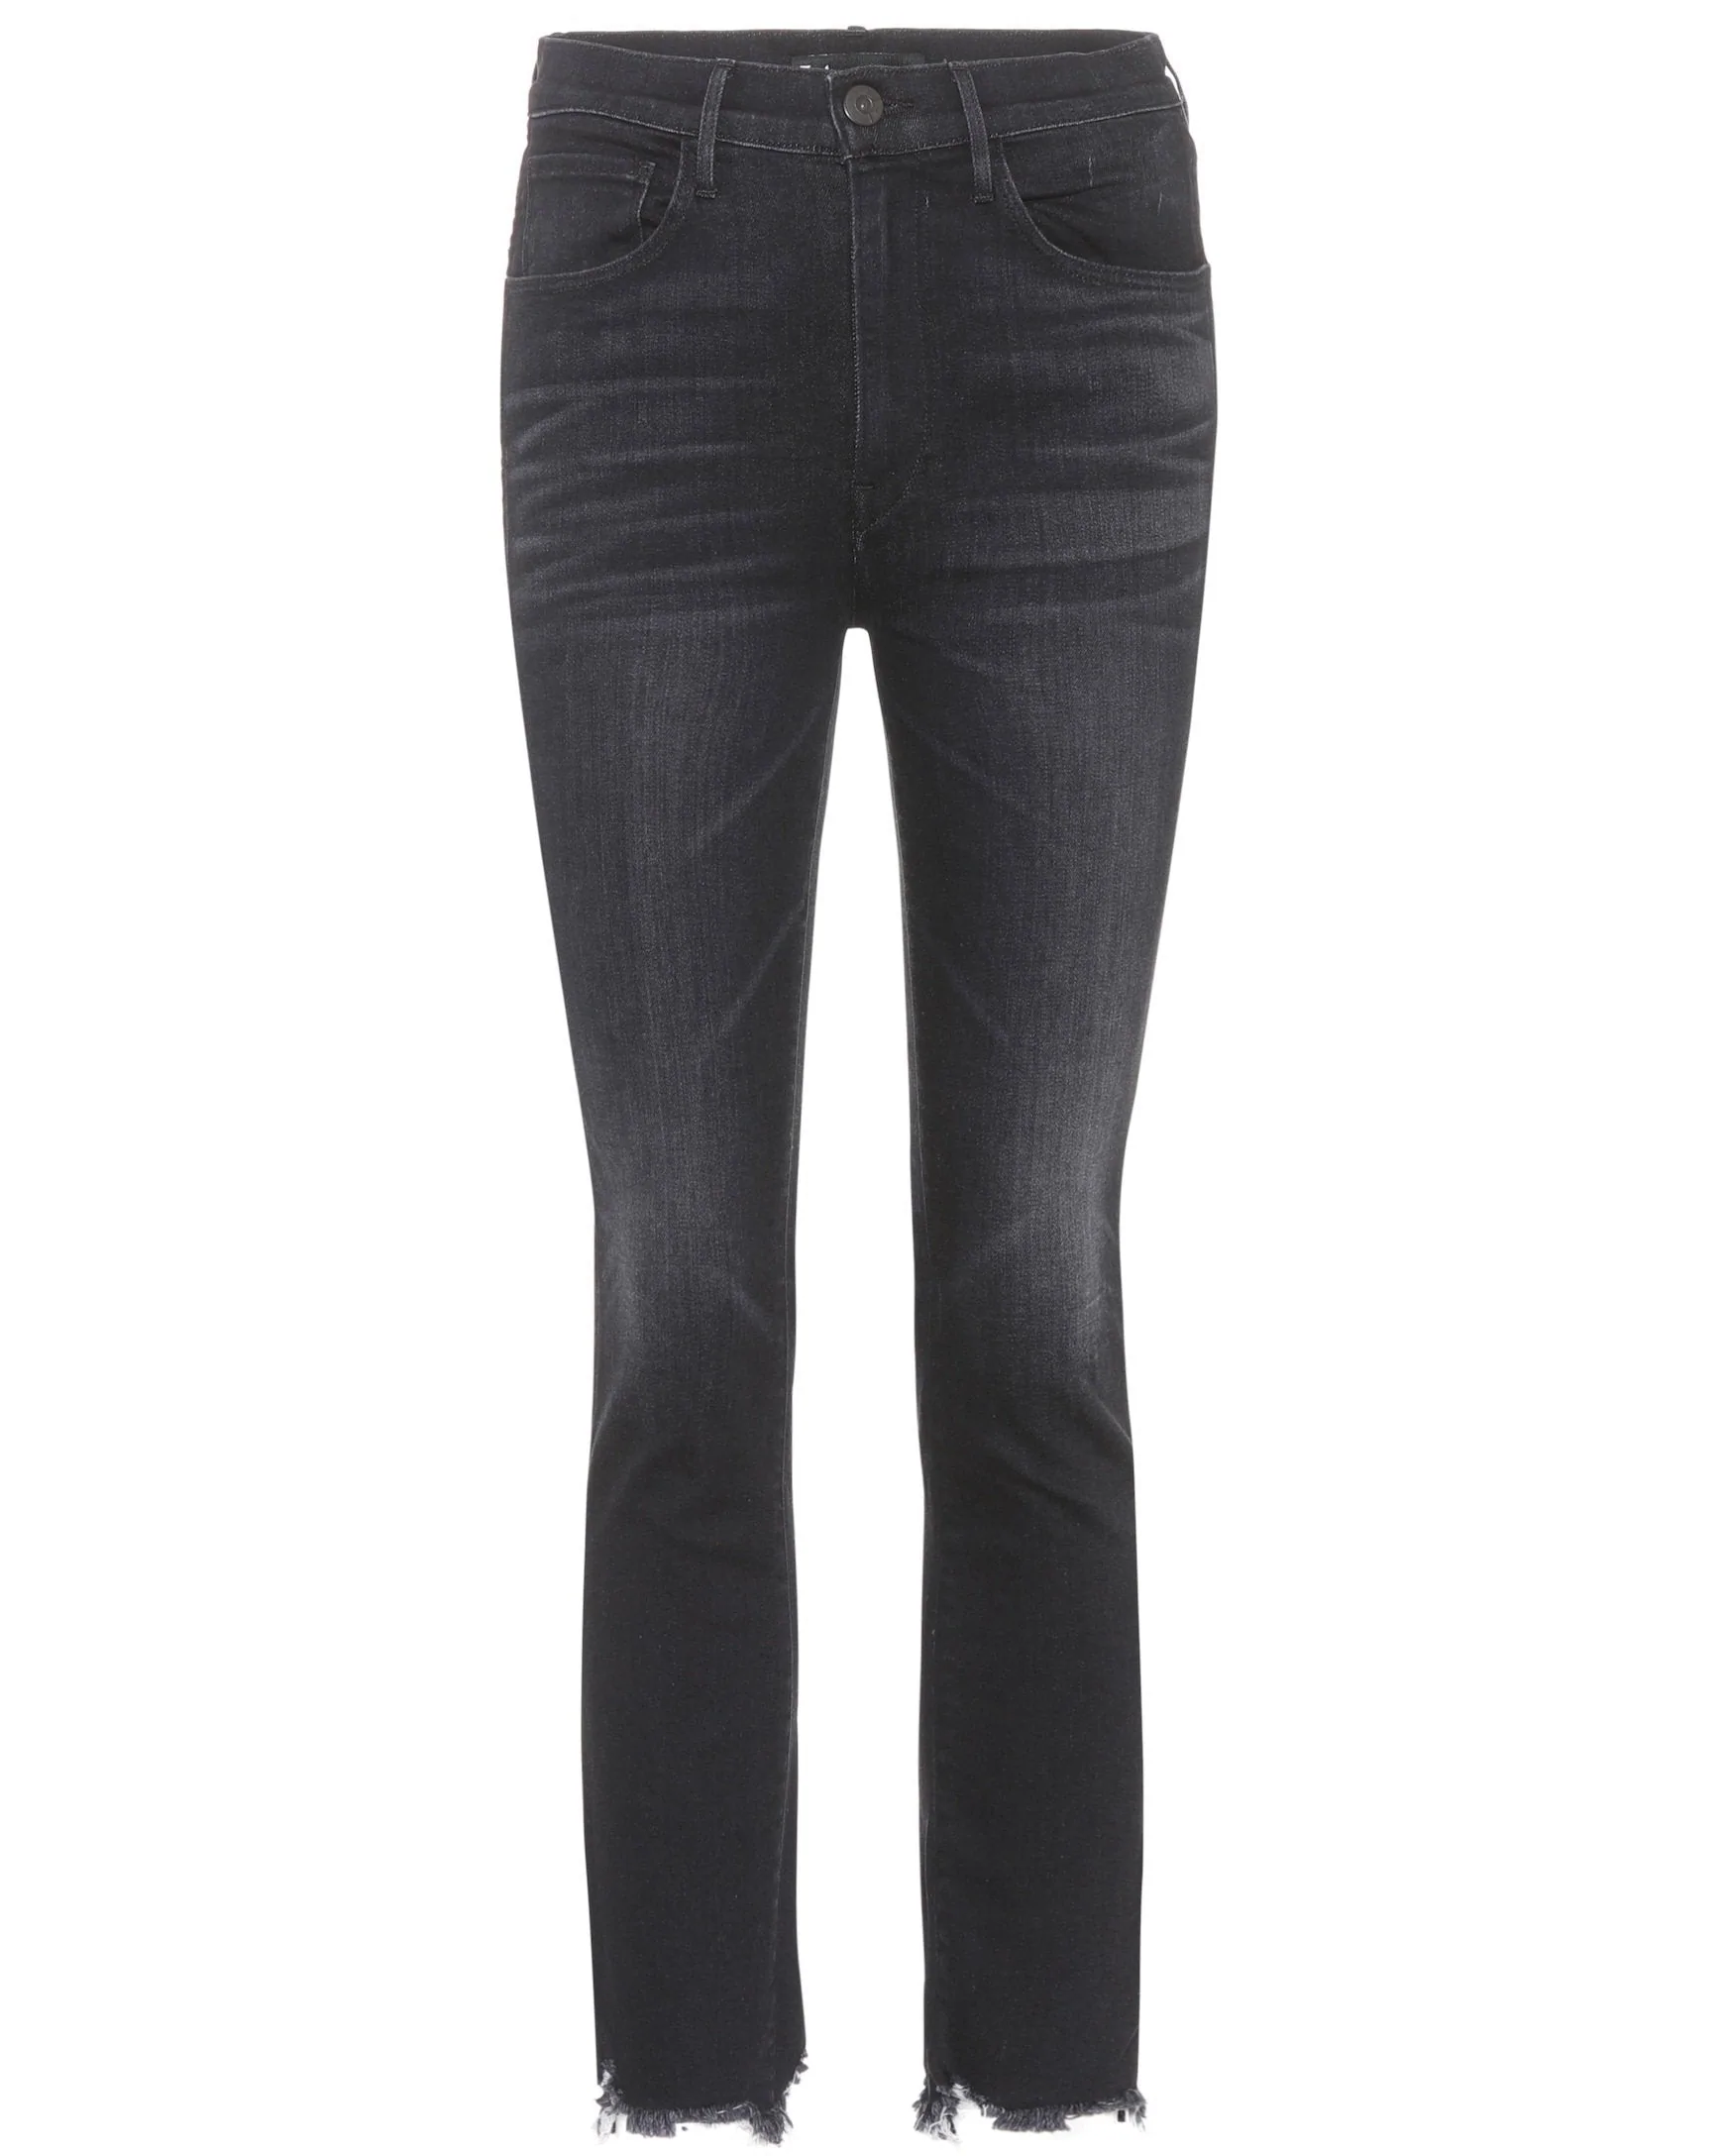 3X1 W3 Straight Authentic Jeans, Black